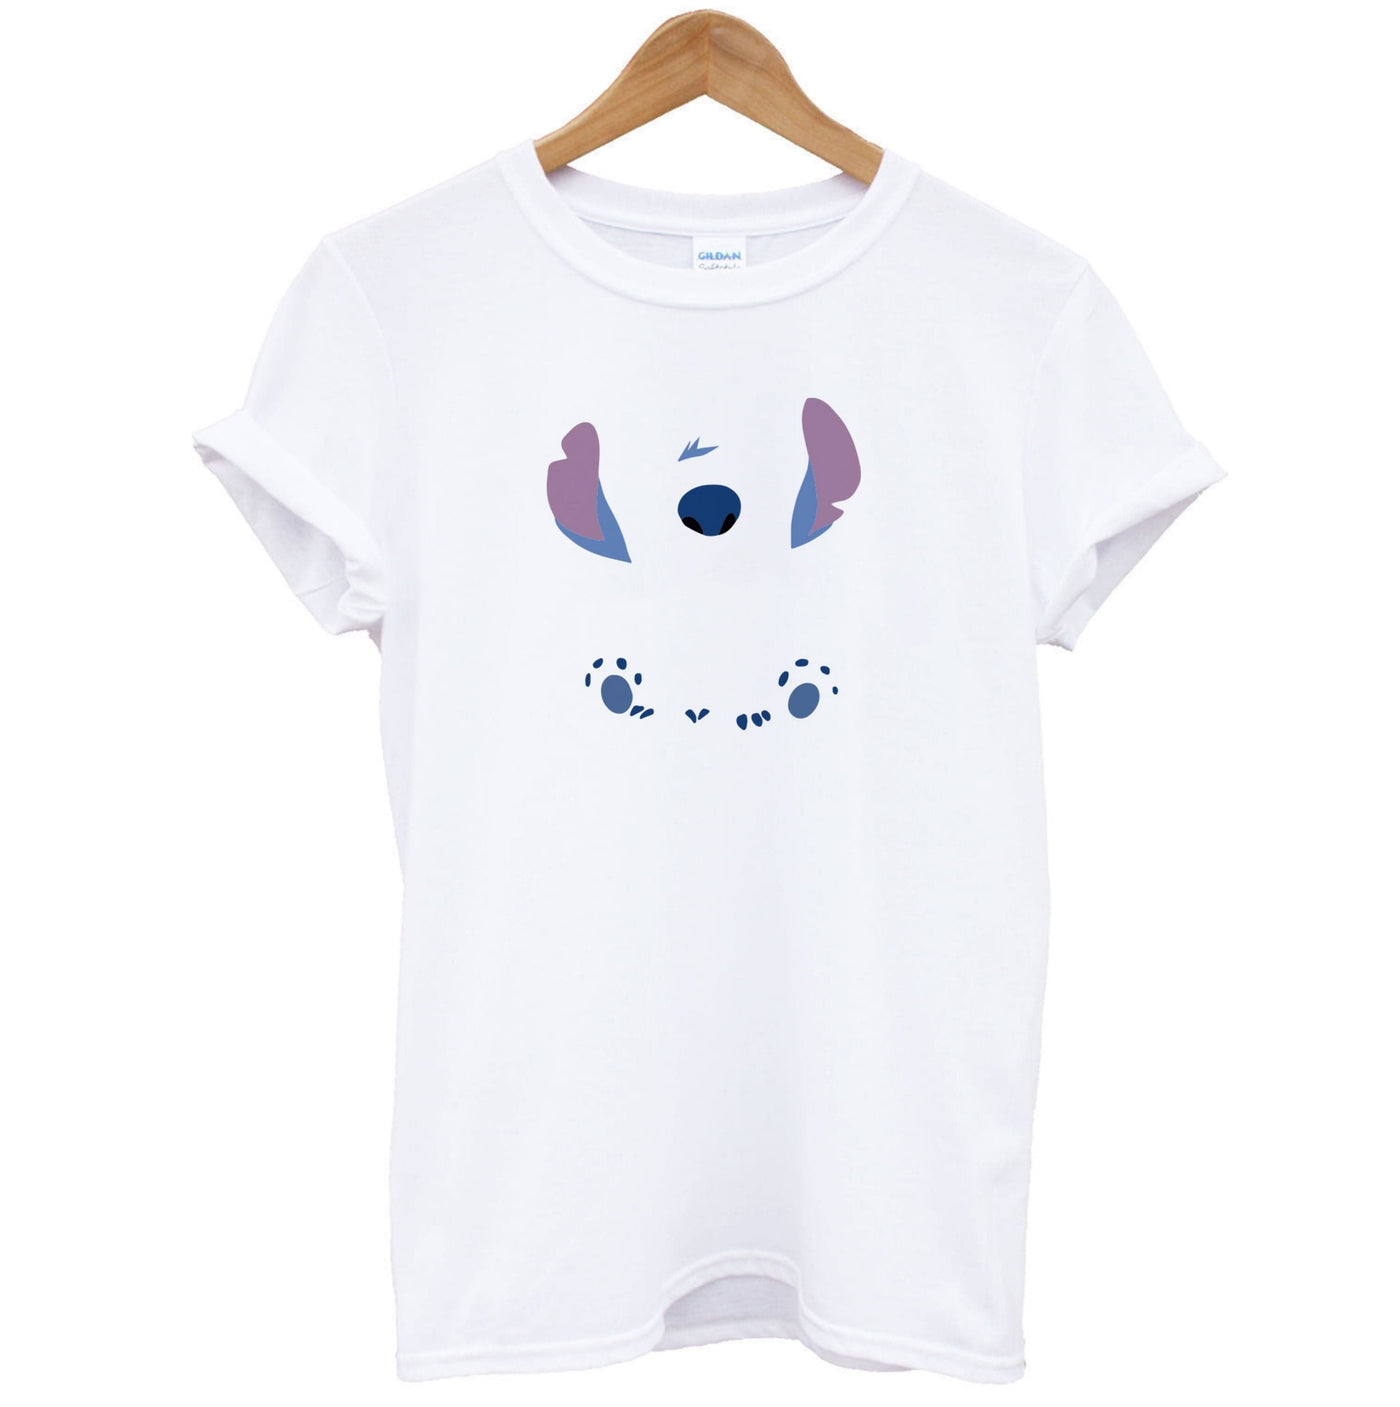 Stitch - Disney T-Shirt